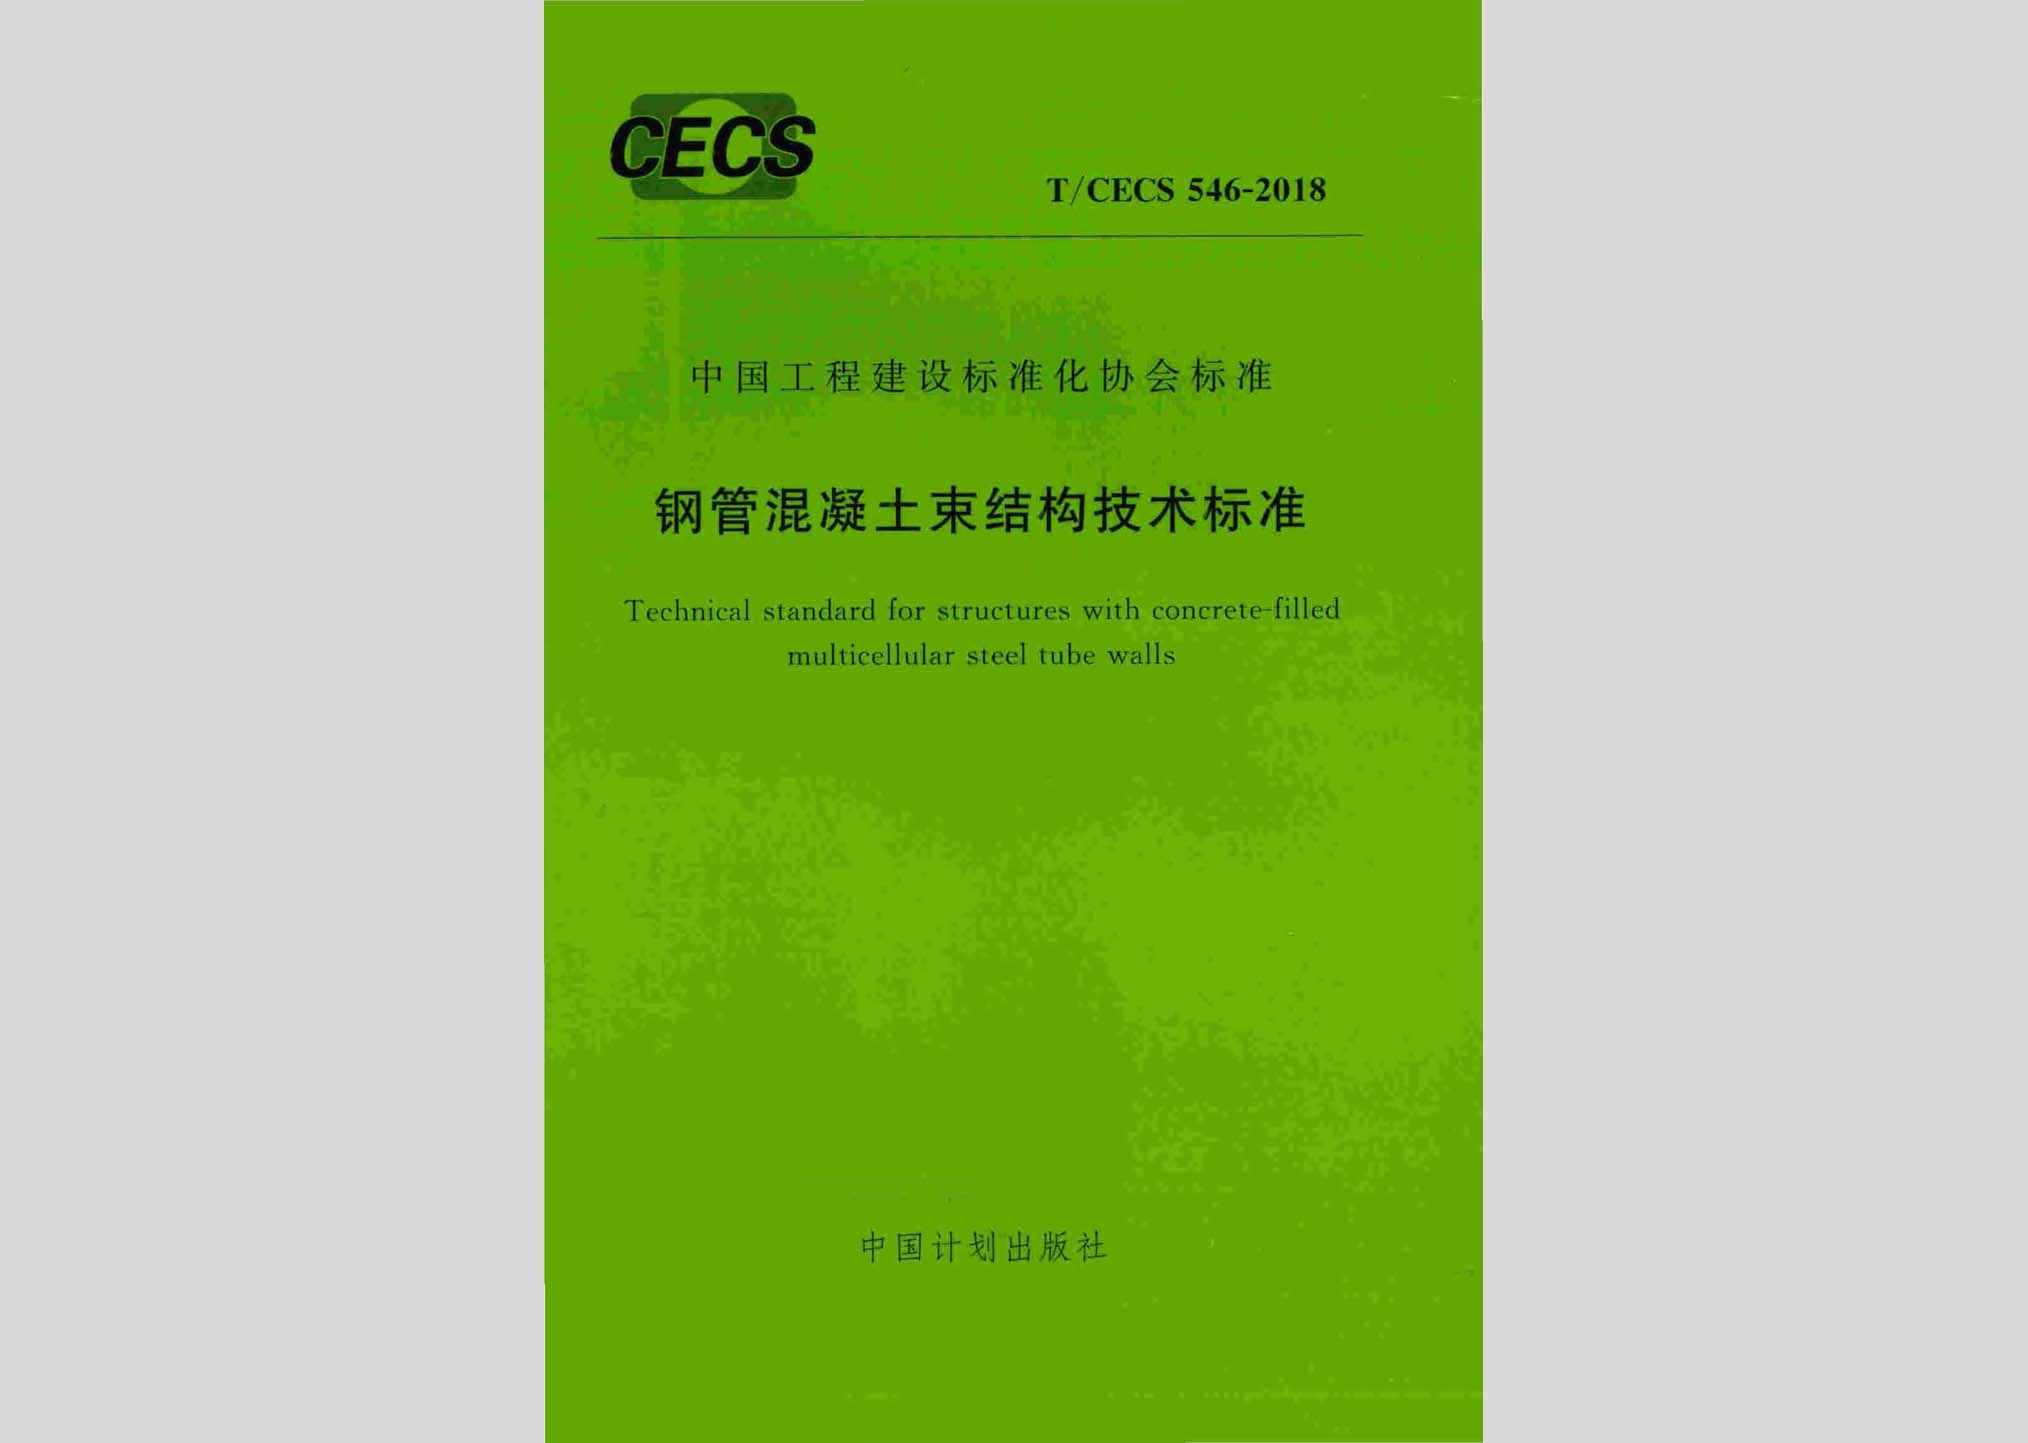 T/CECS546-2018：钢管混凝土束结构技术标准